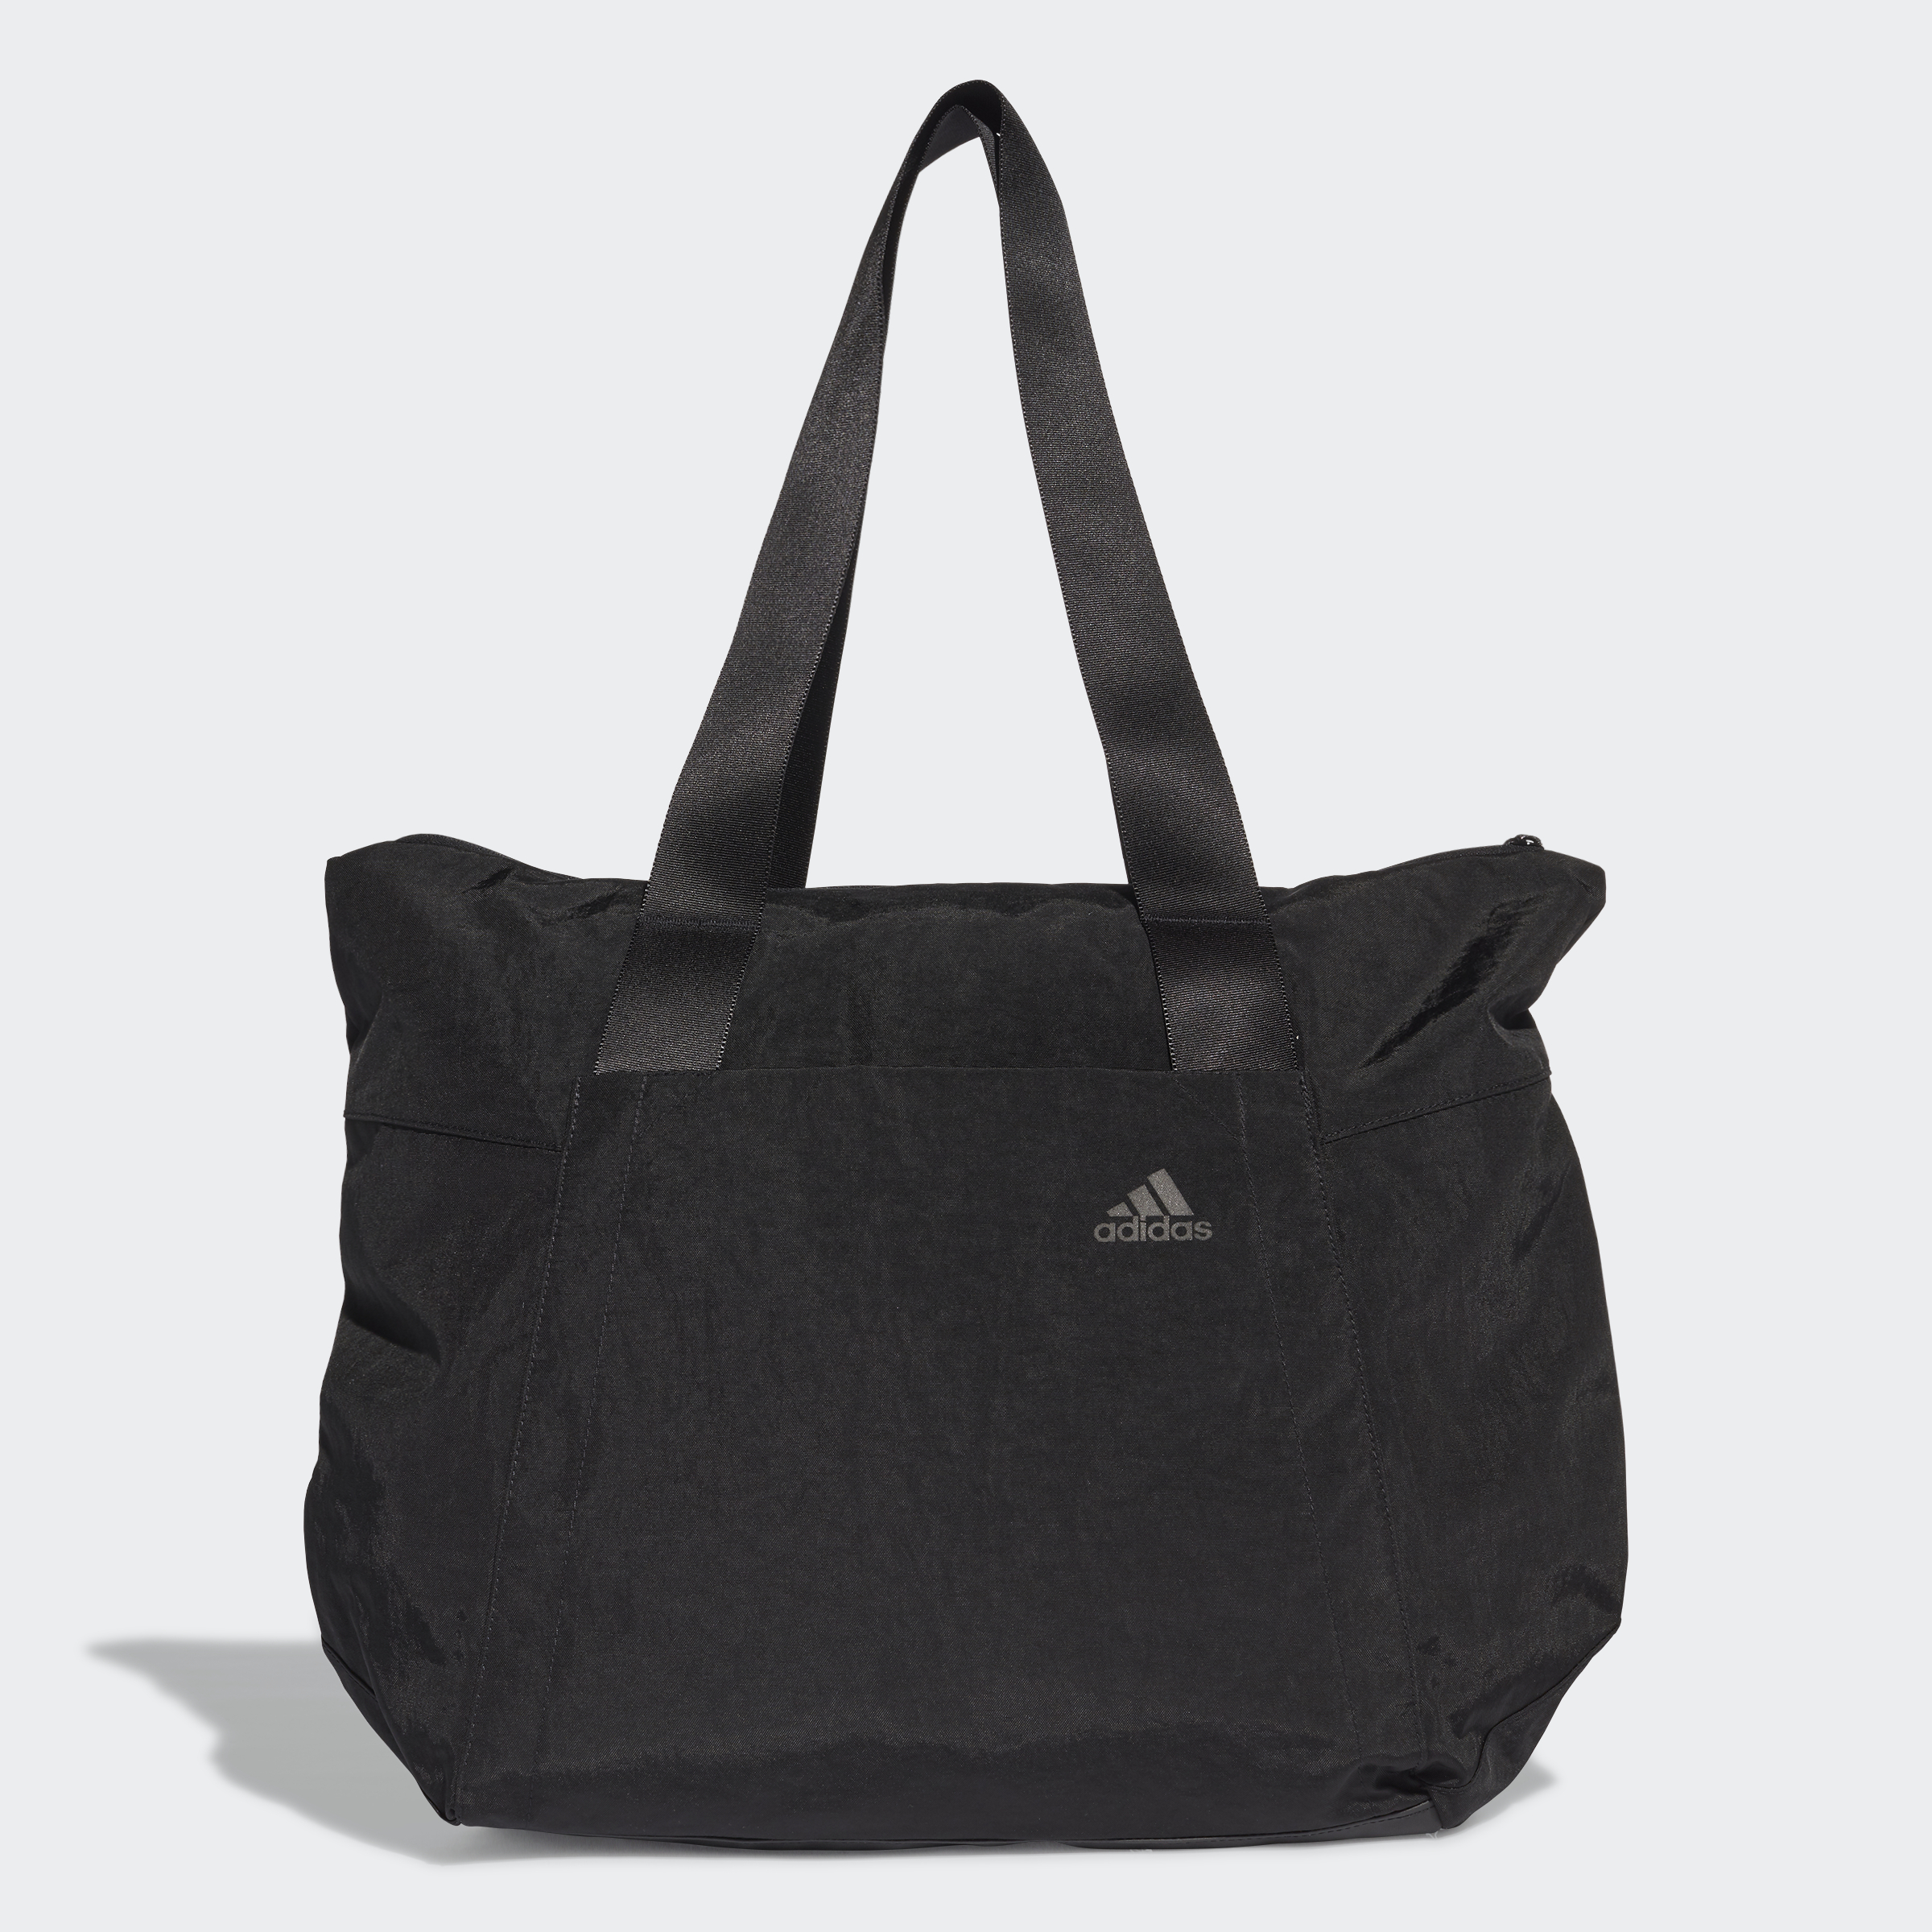 adidas Originals Tote Bag Women's | eBay